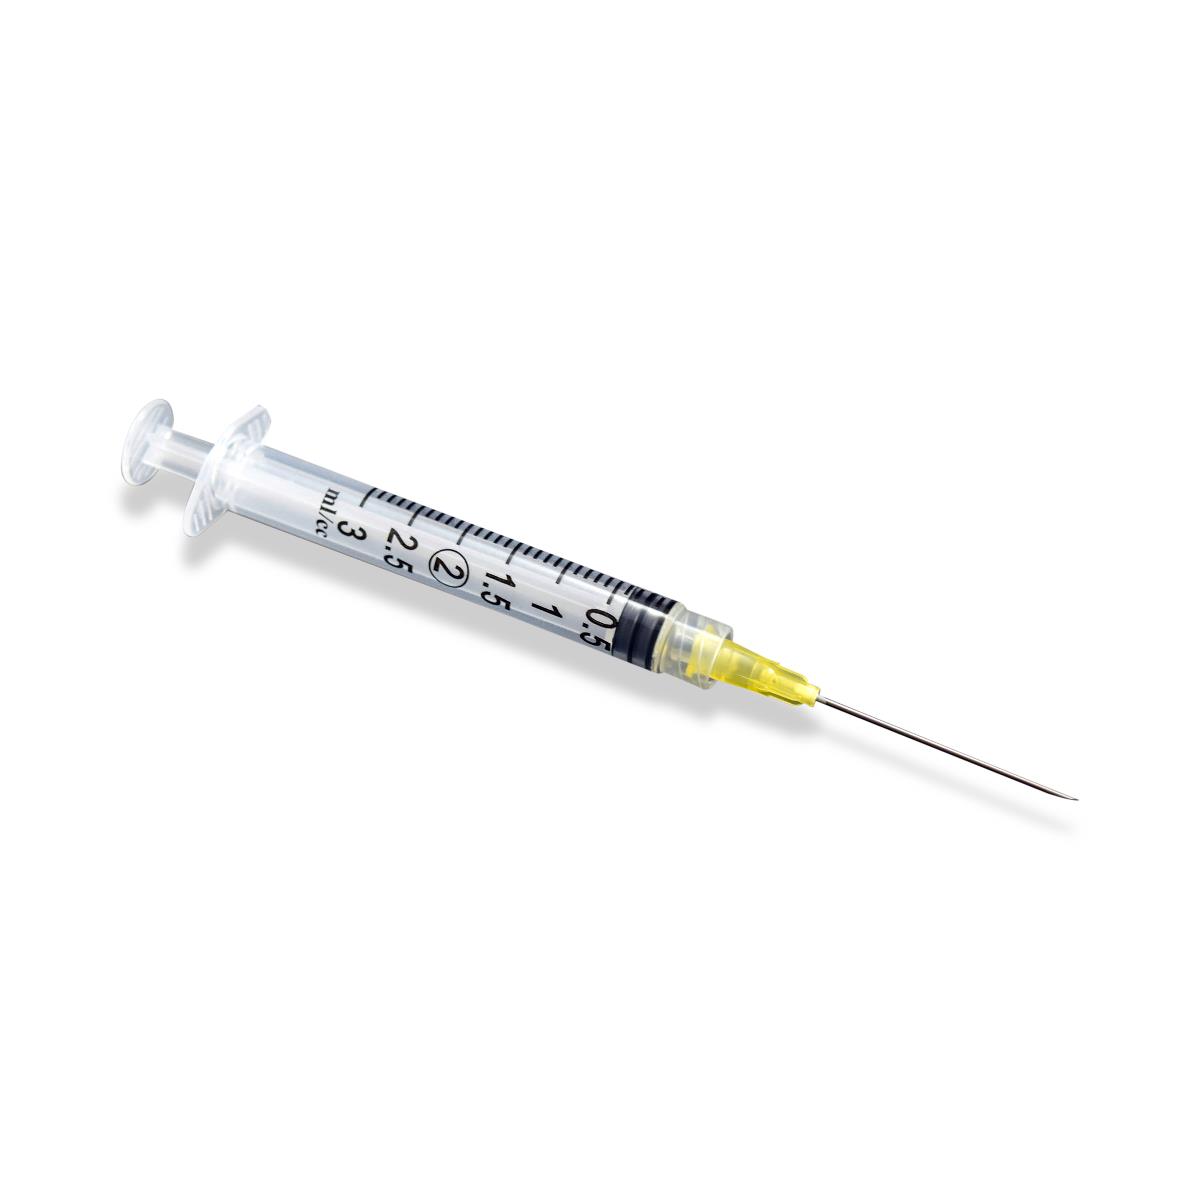 Disposable Syringe 3 ml 22g Needle (Luer Lock), Pharmacy Medical Supplies